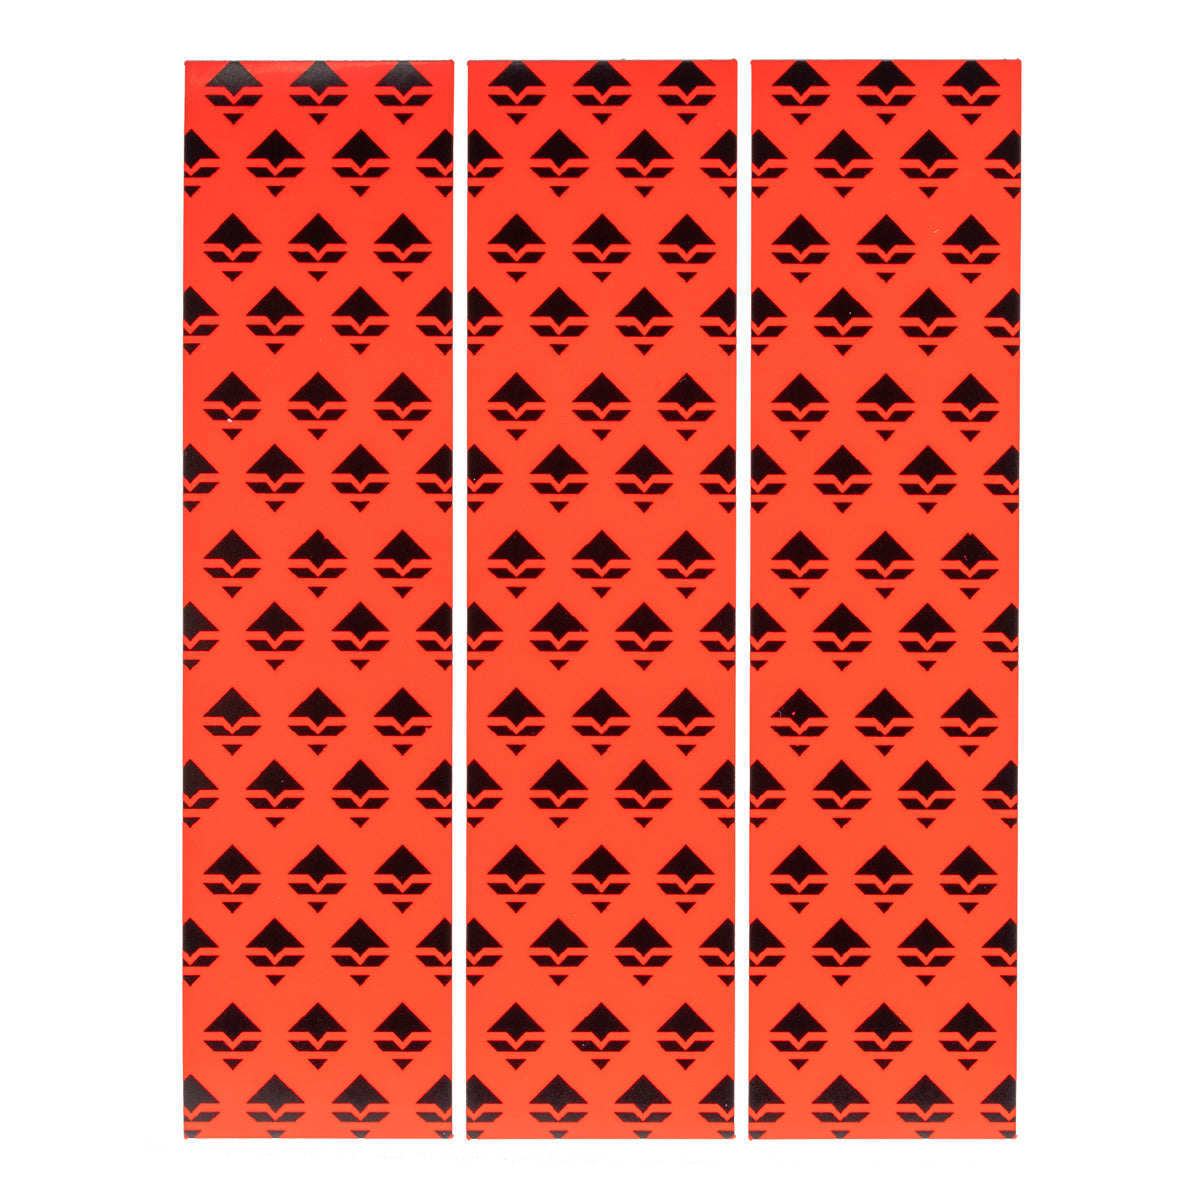 GOHUNT Custom Arrow Wrap Option 7 - 12 Count in Red by GOHUNT | Lone Peak Outdoors - GOHUNT Shop